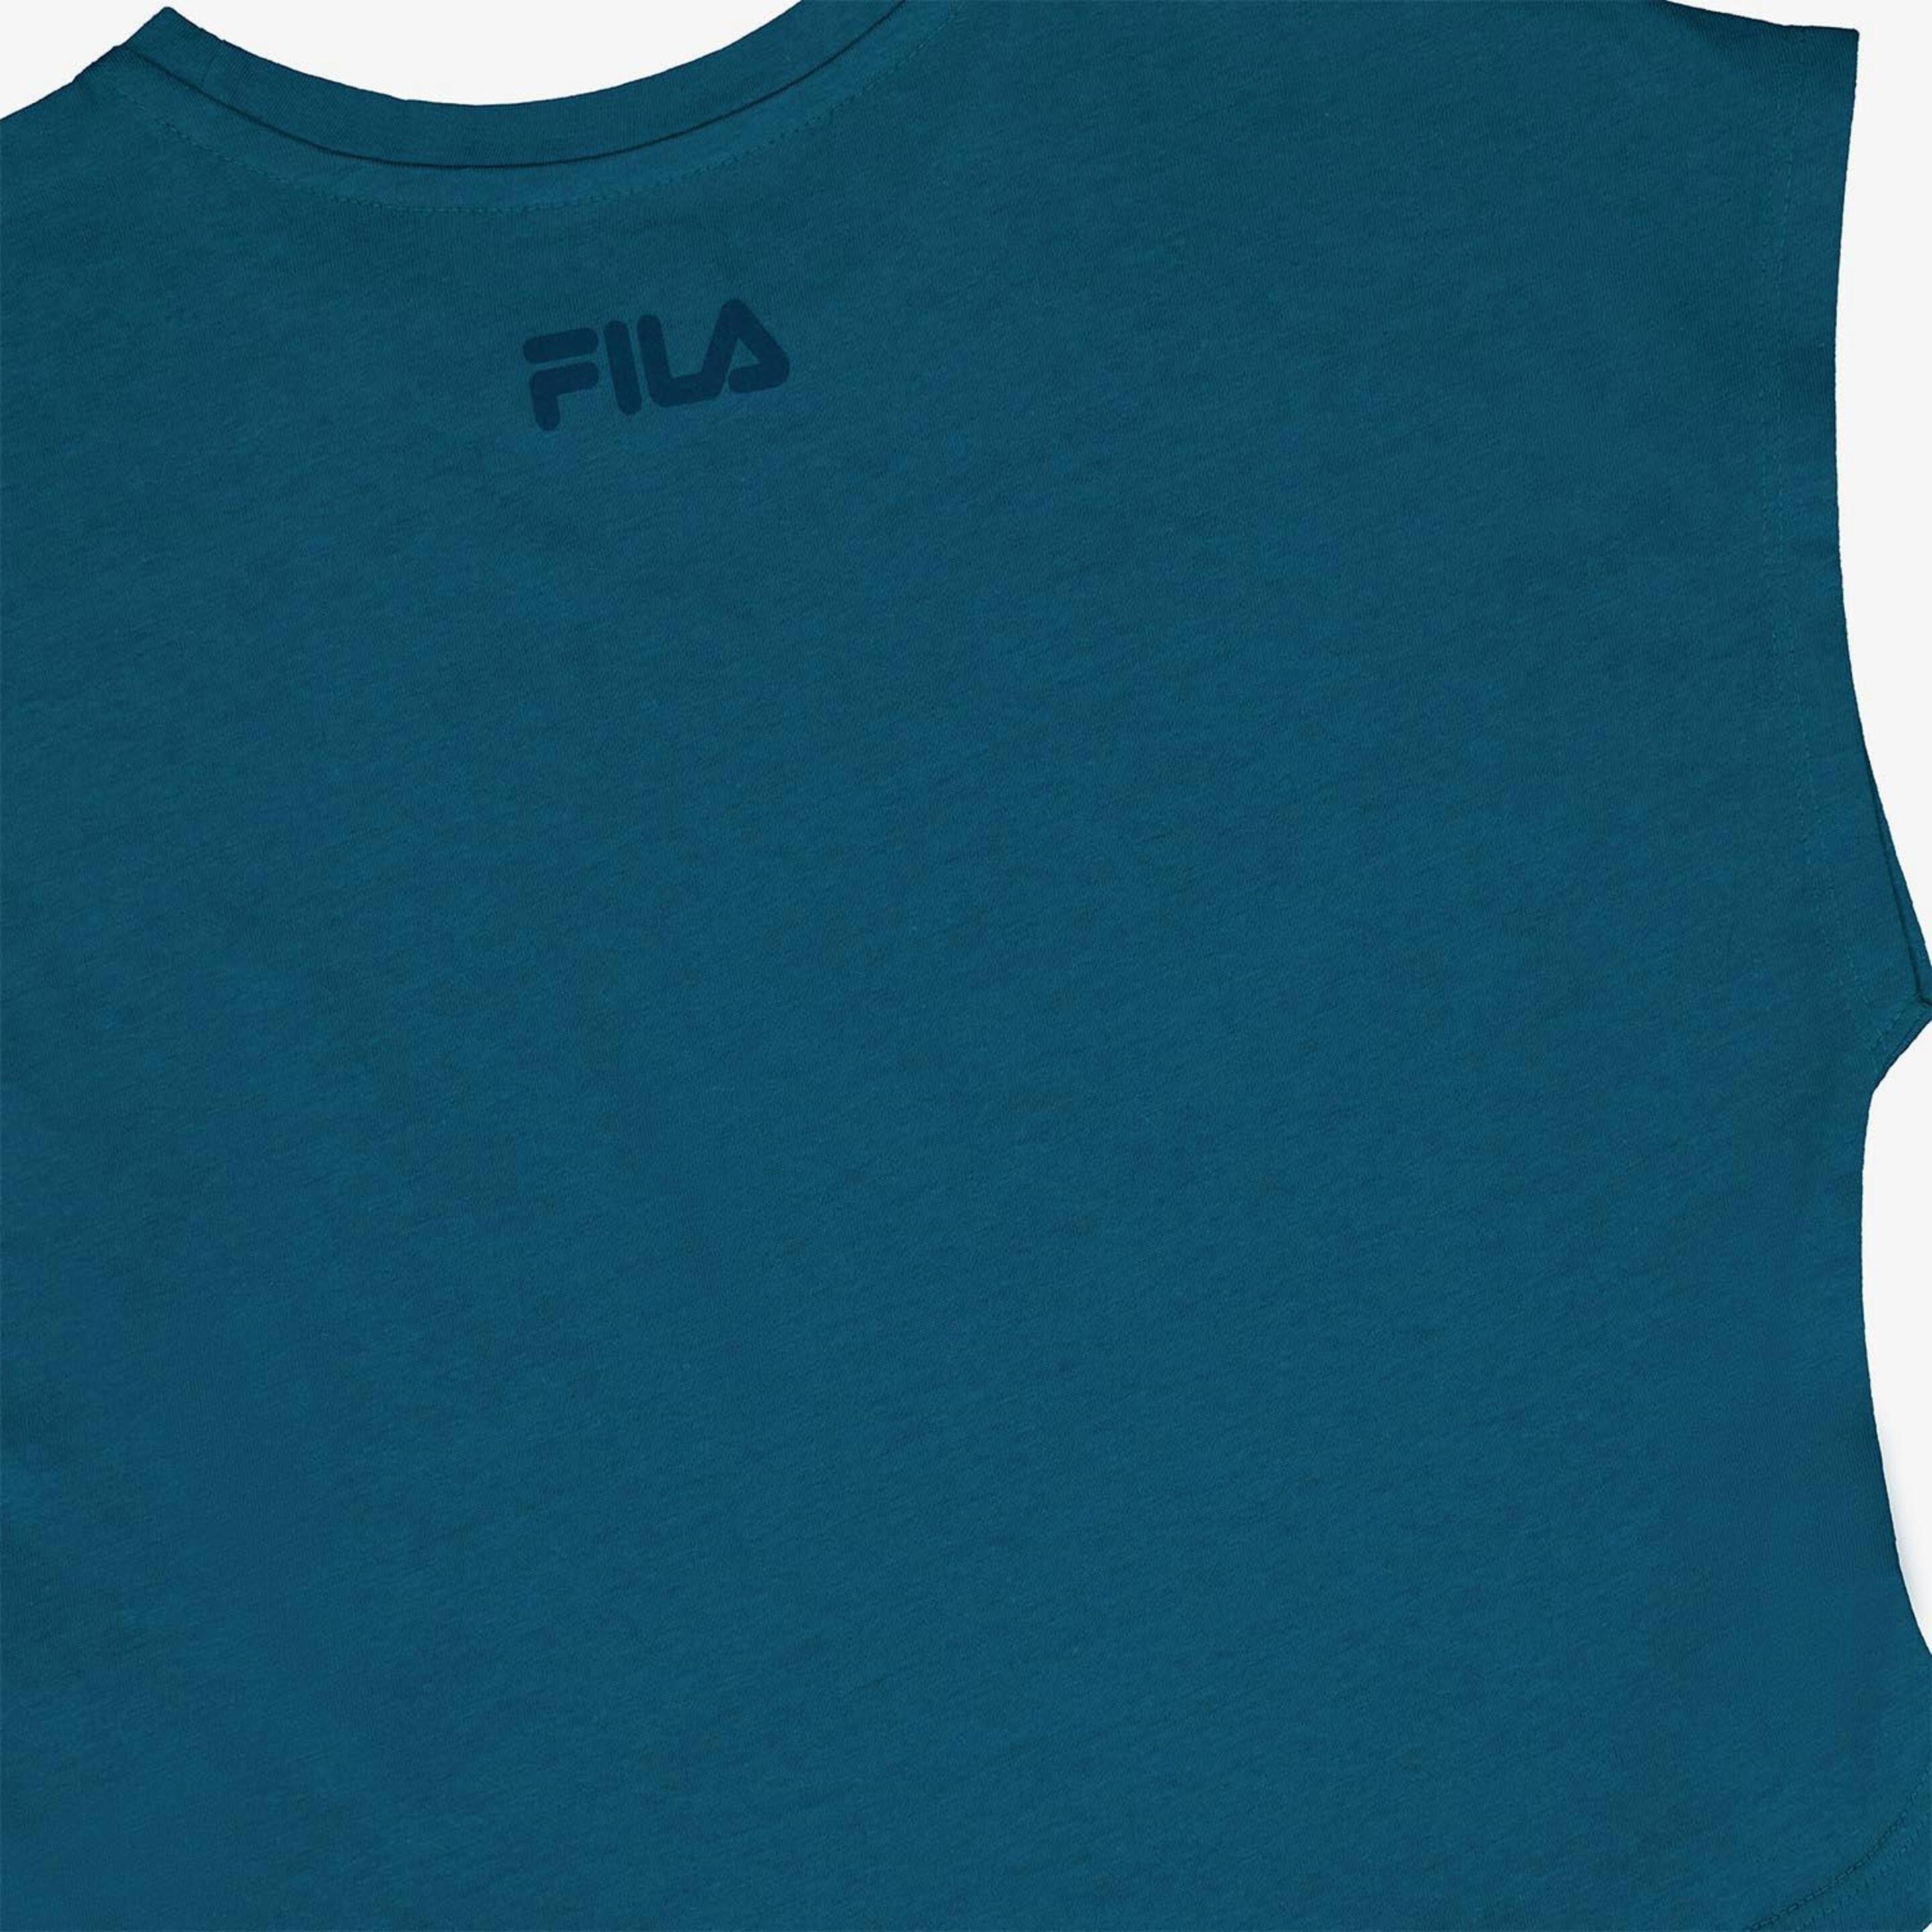 Camiseta Fila - Turquesa - Camiseta Niña